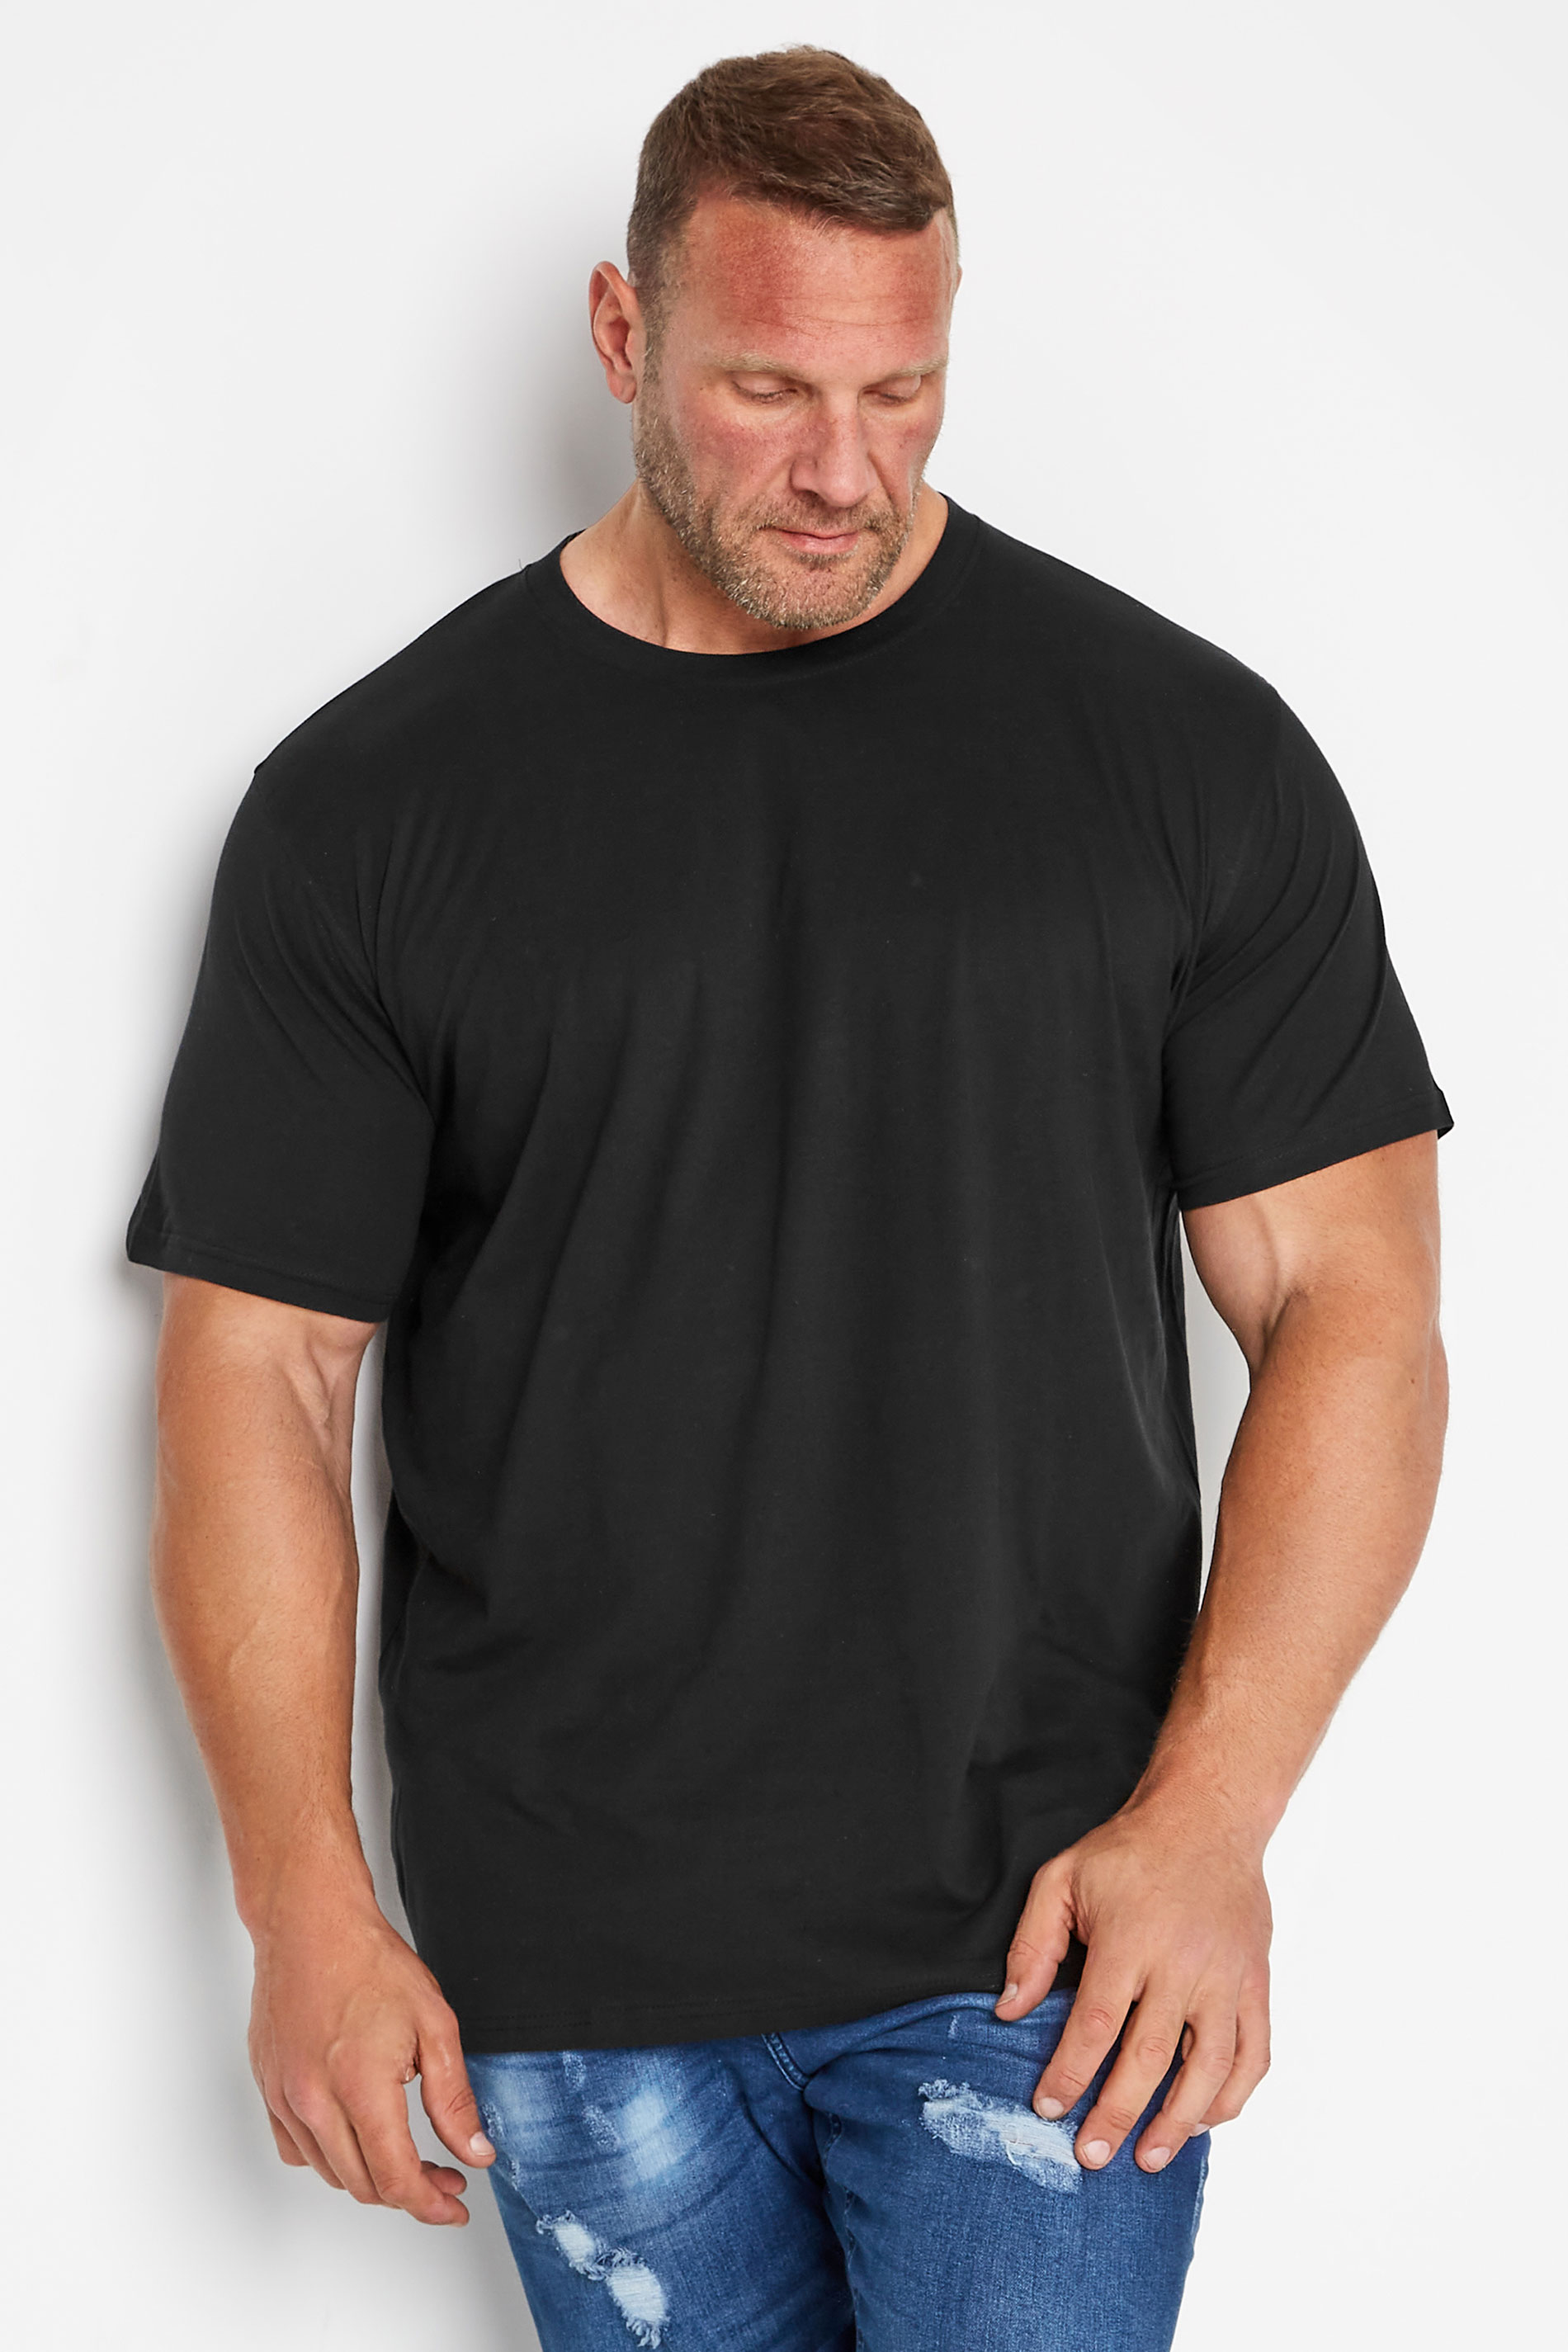 D555 Big & Tall 2 PACK Black & White T-Shirts| BadRhino 2